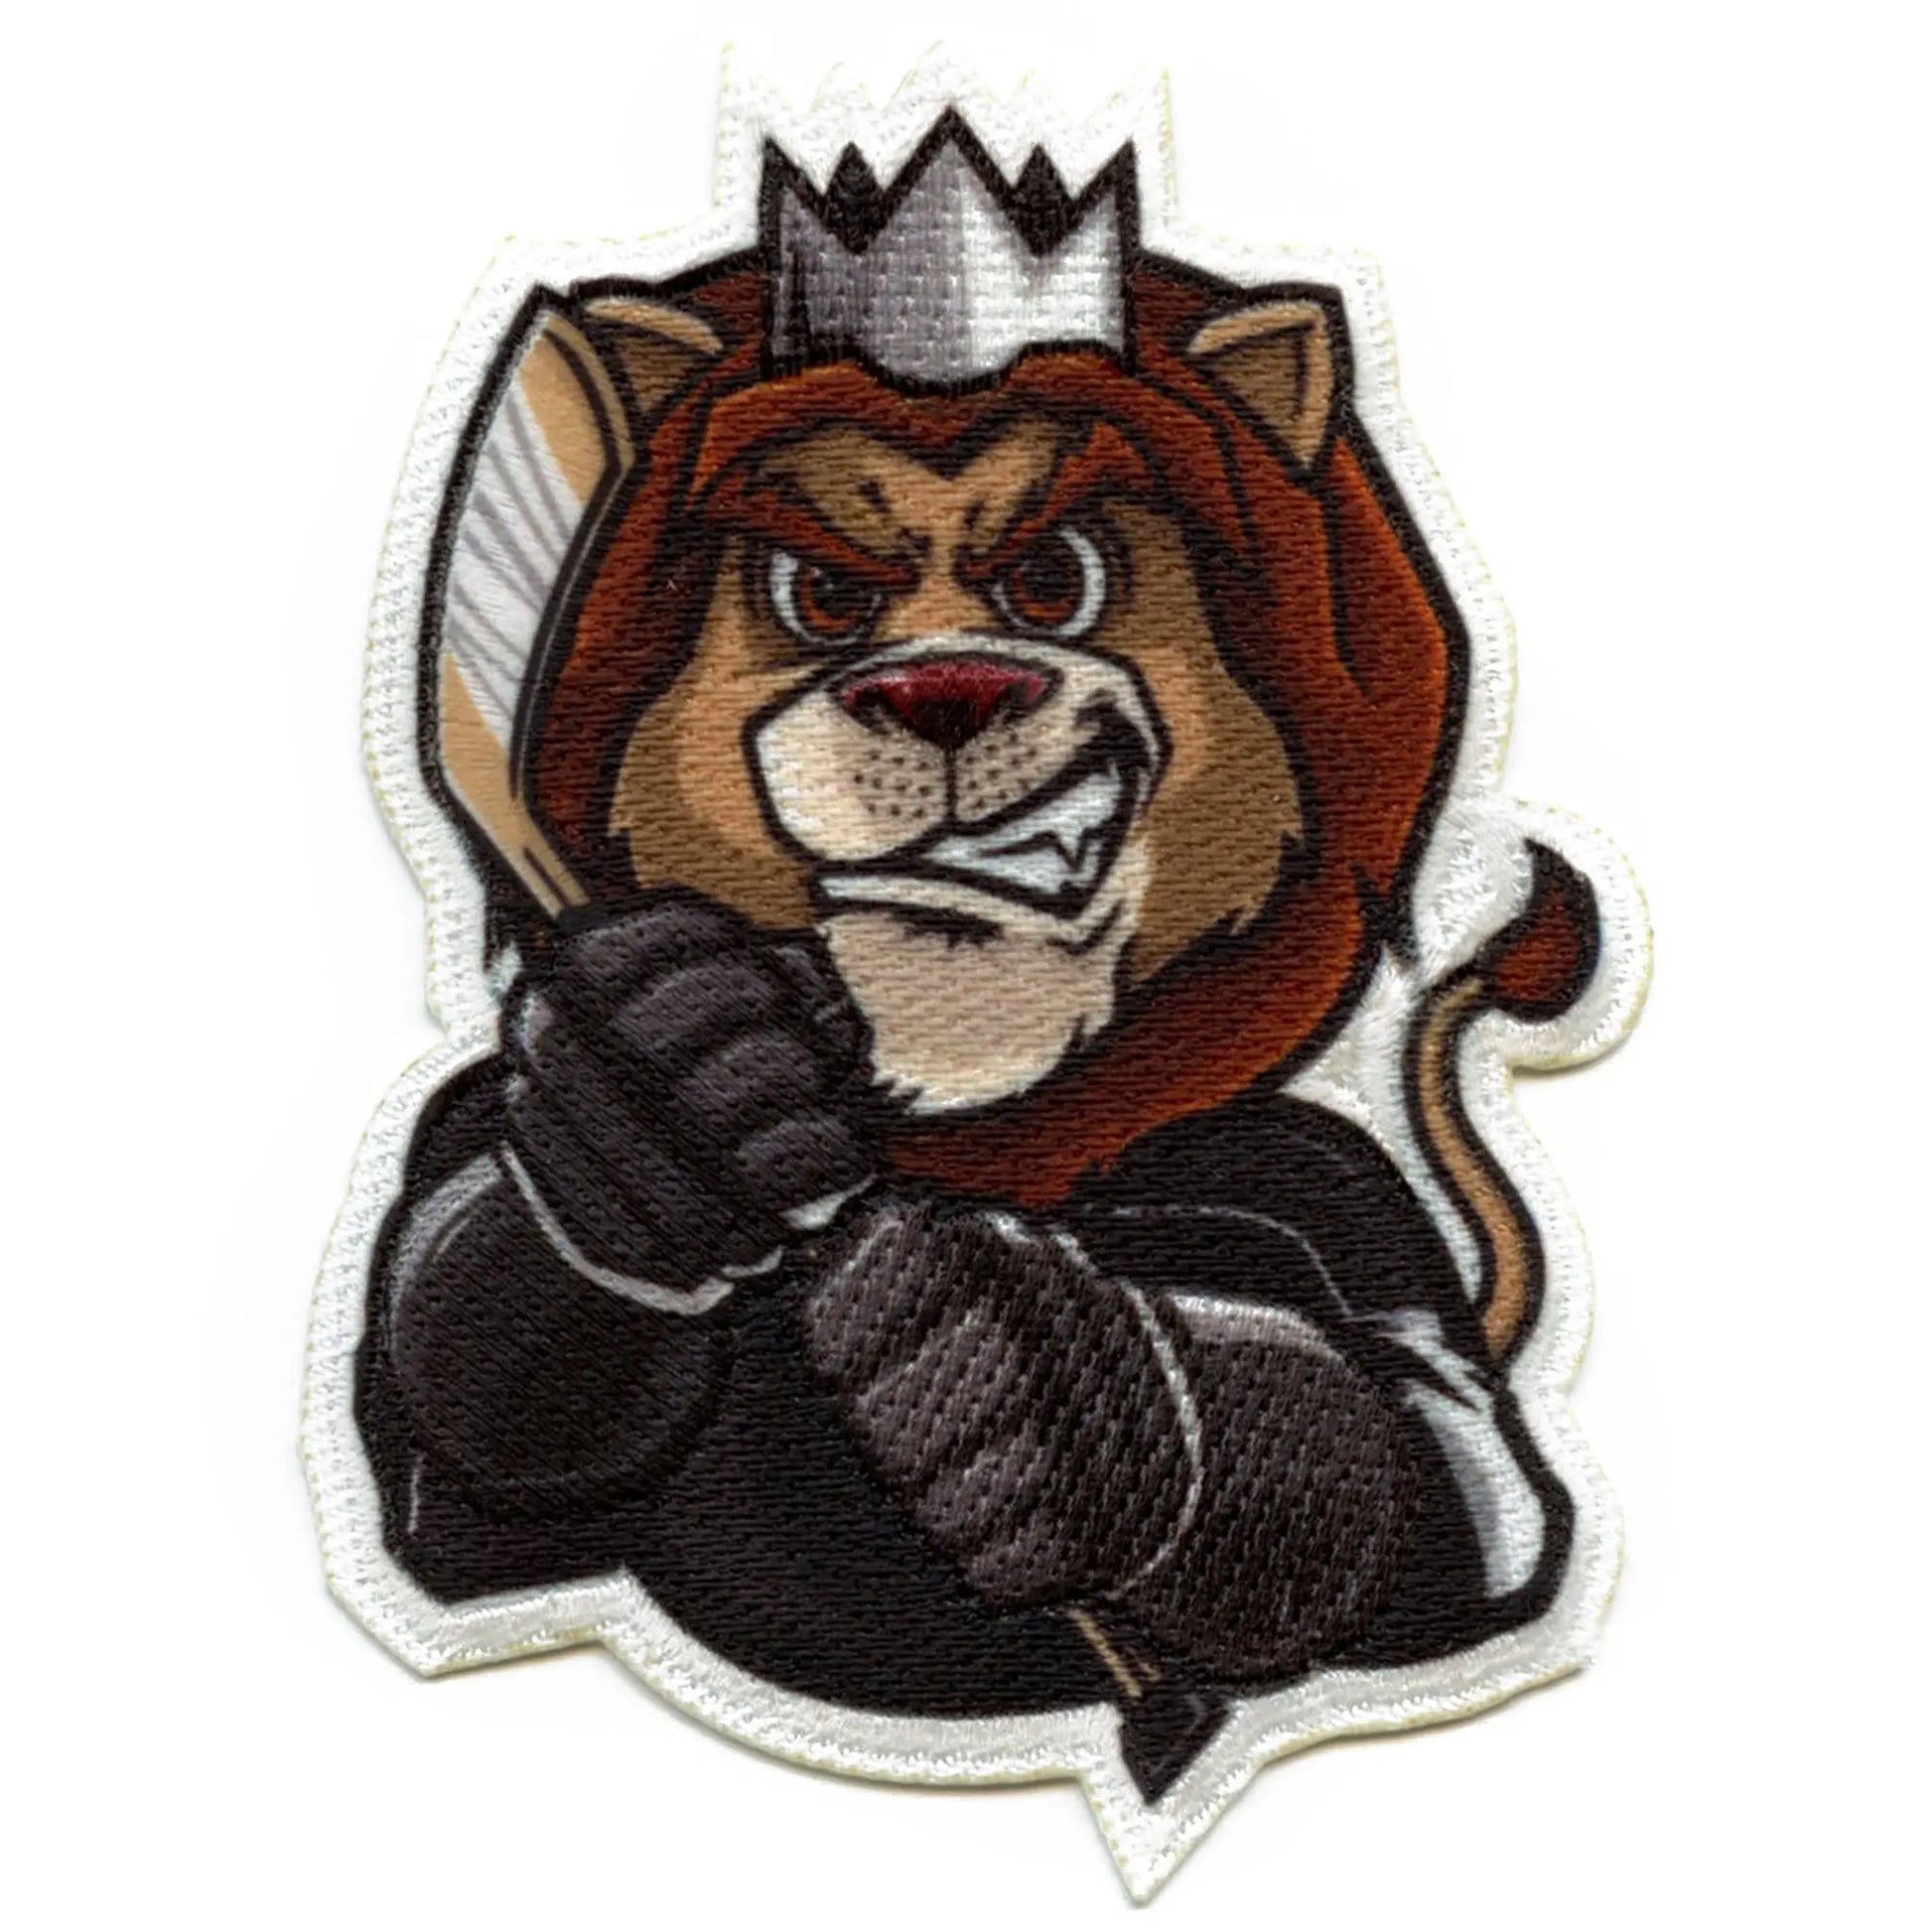 drawing la kings mascot